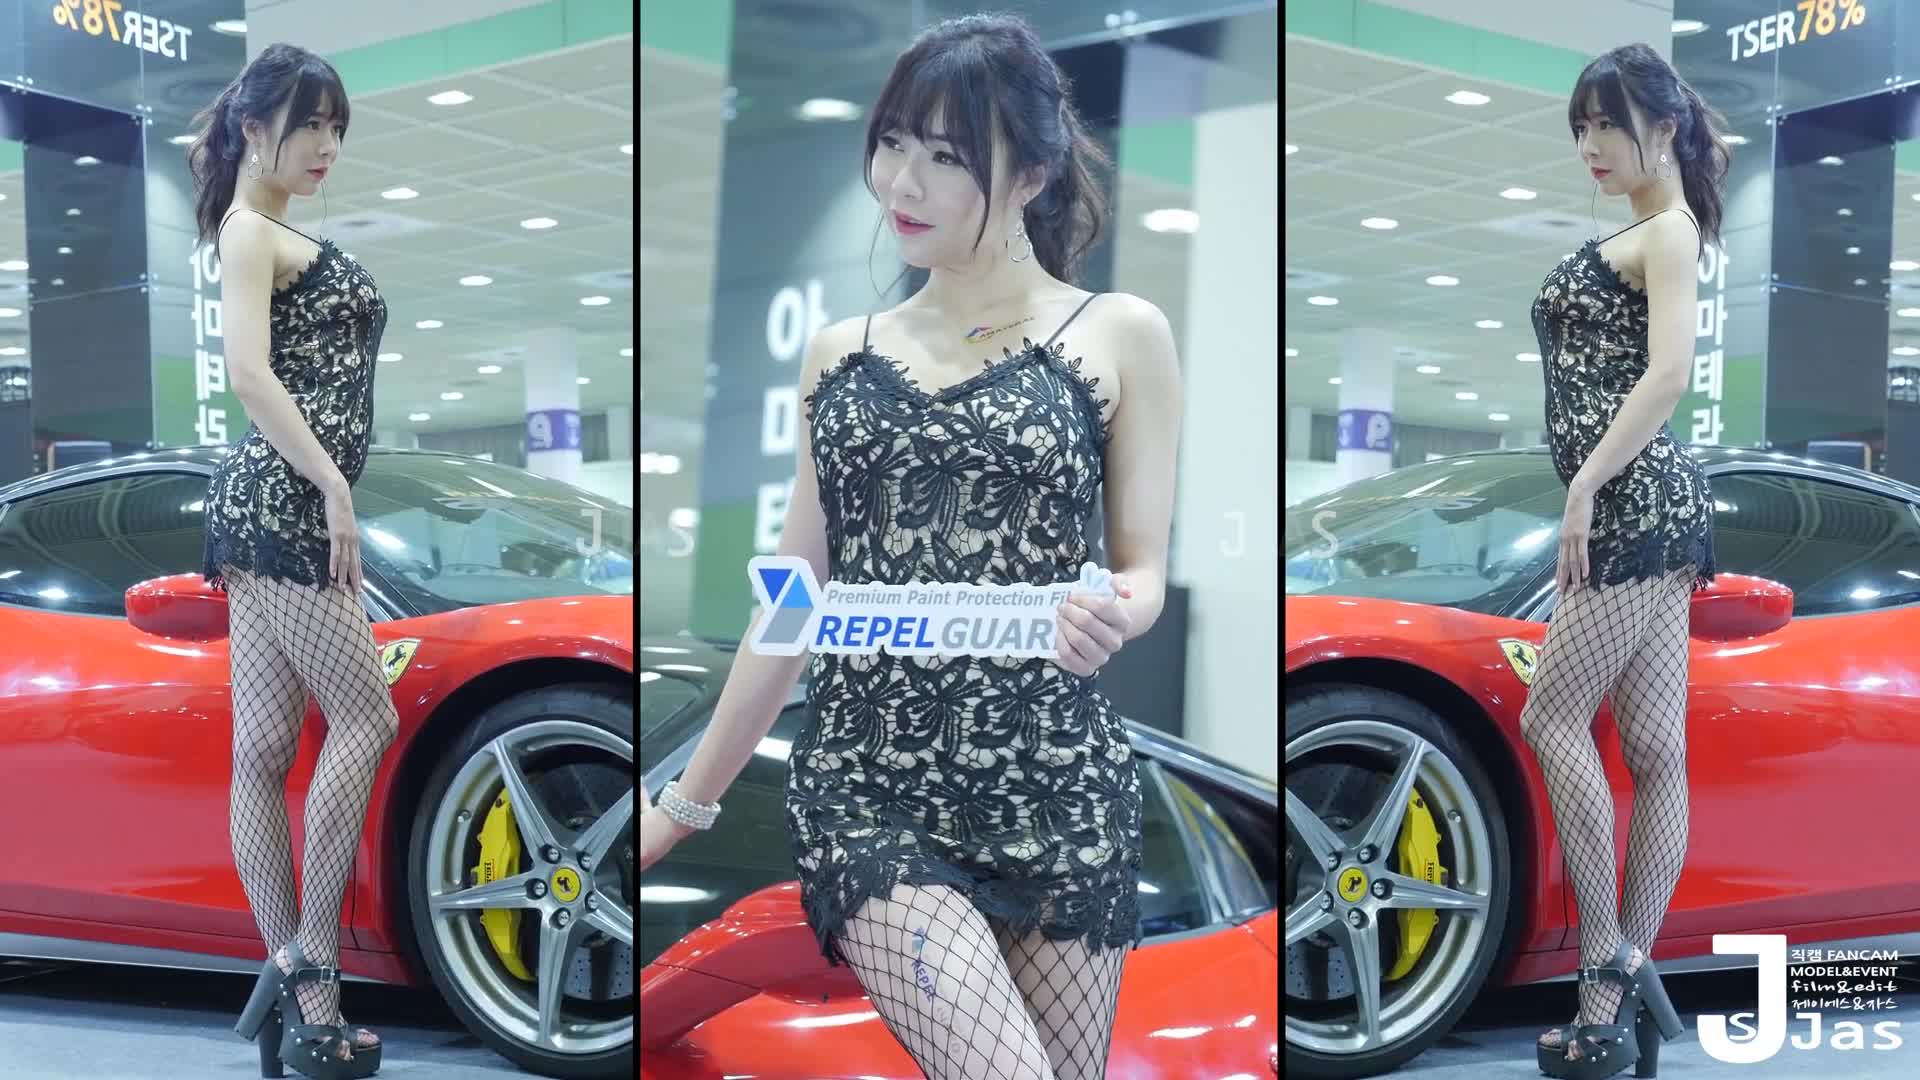 [4K EDIT] 최하니 Choi Hani Model 1 서울오토살롱 SEOULAUTOSALON 2017 by 직캠 fancam JS